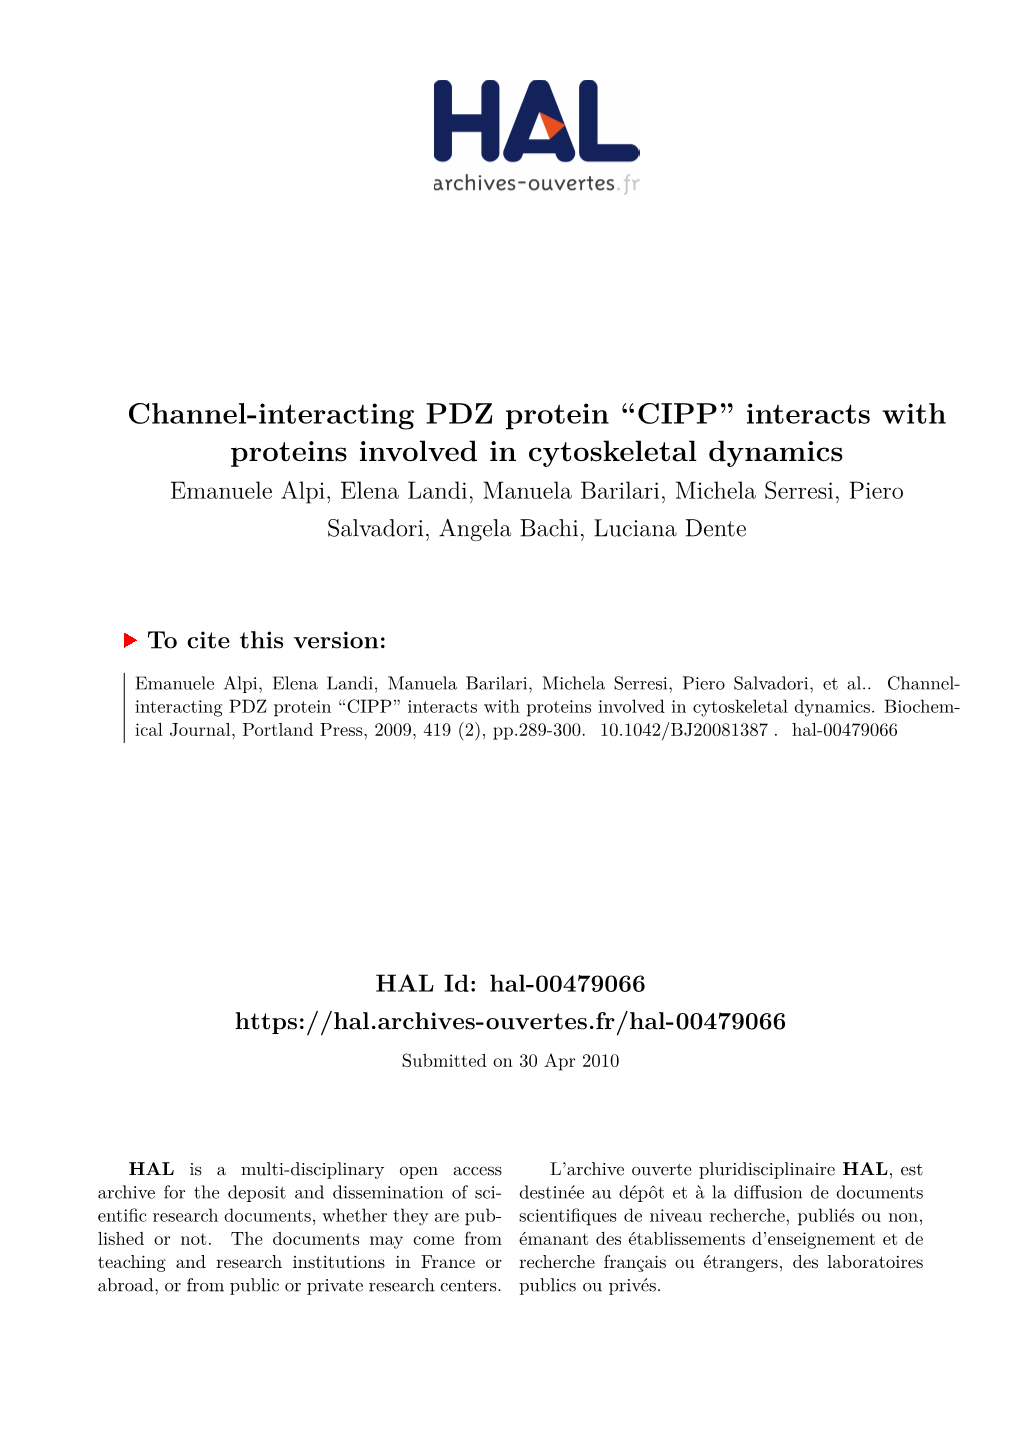 Interacts with Proteins Involved in Cytoskeletal Dynamics Emanuele Alpi, Elena Landi, Manuela Barilari, Michela Serresi, Piero Salvadori, Angela Bachi, Luciana Dente